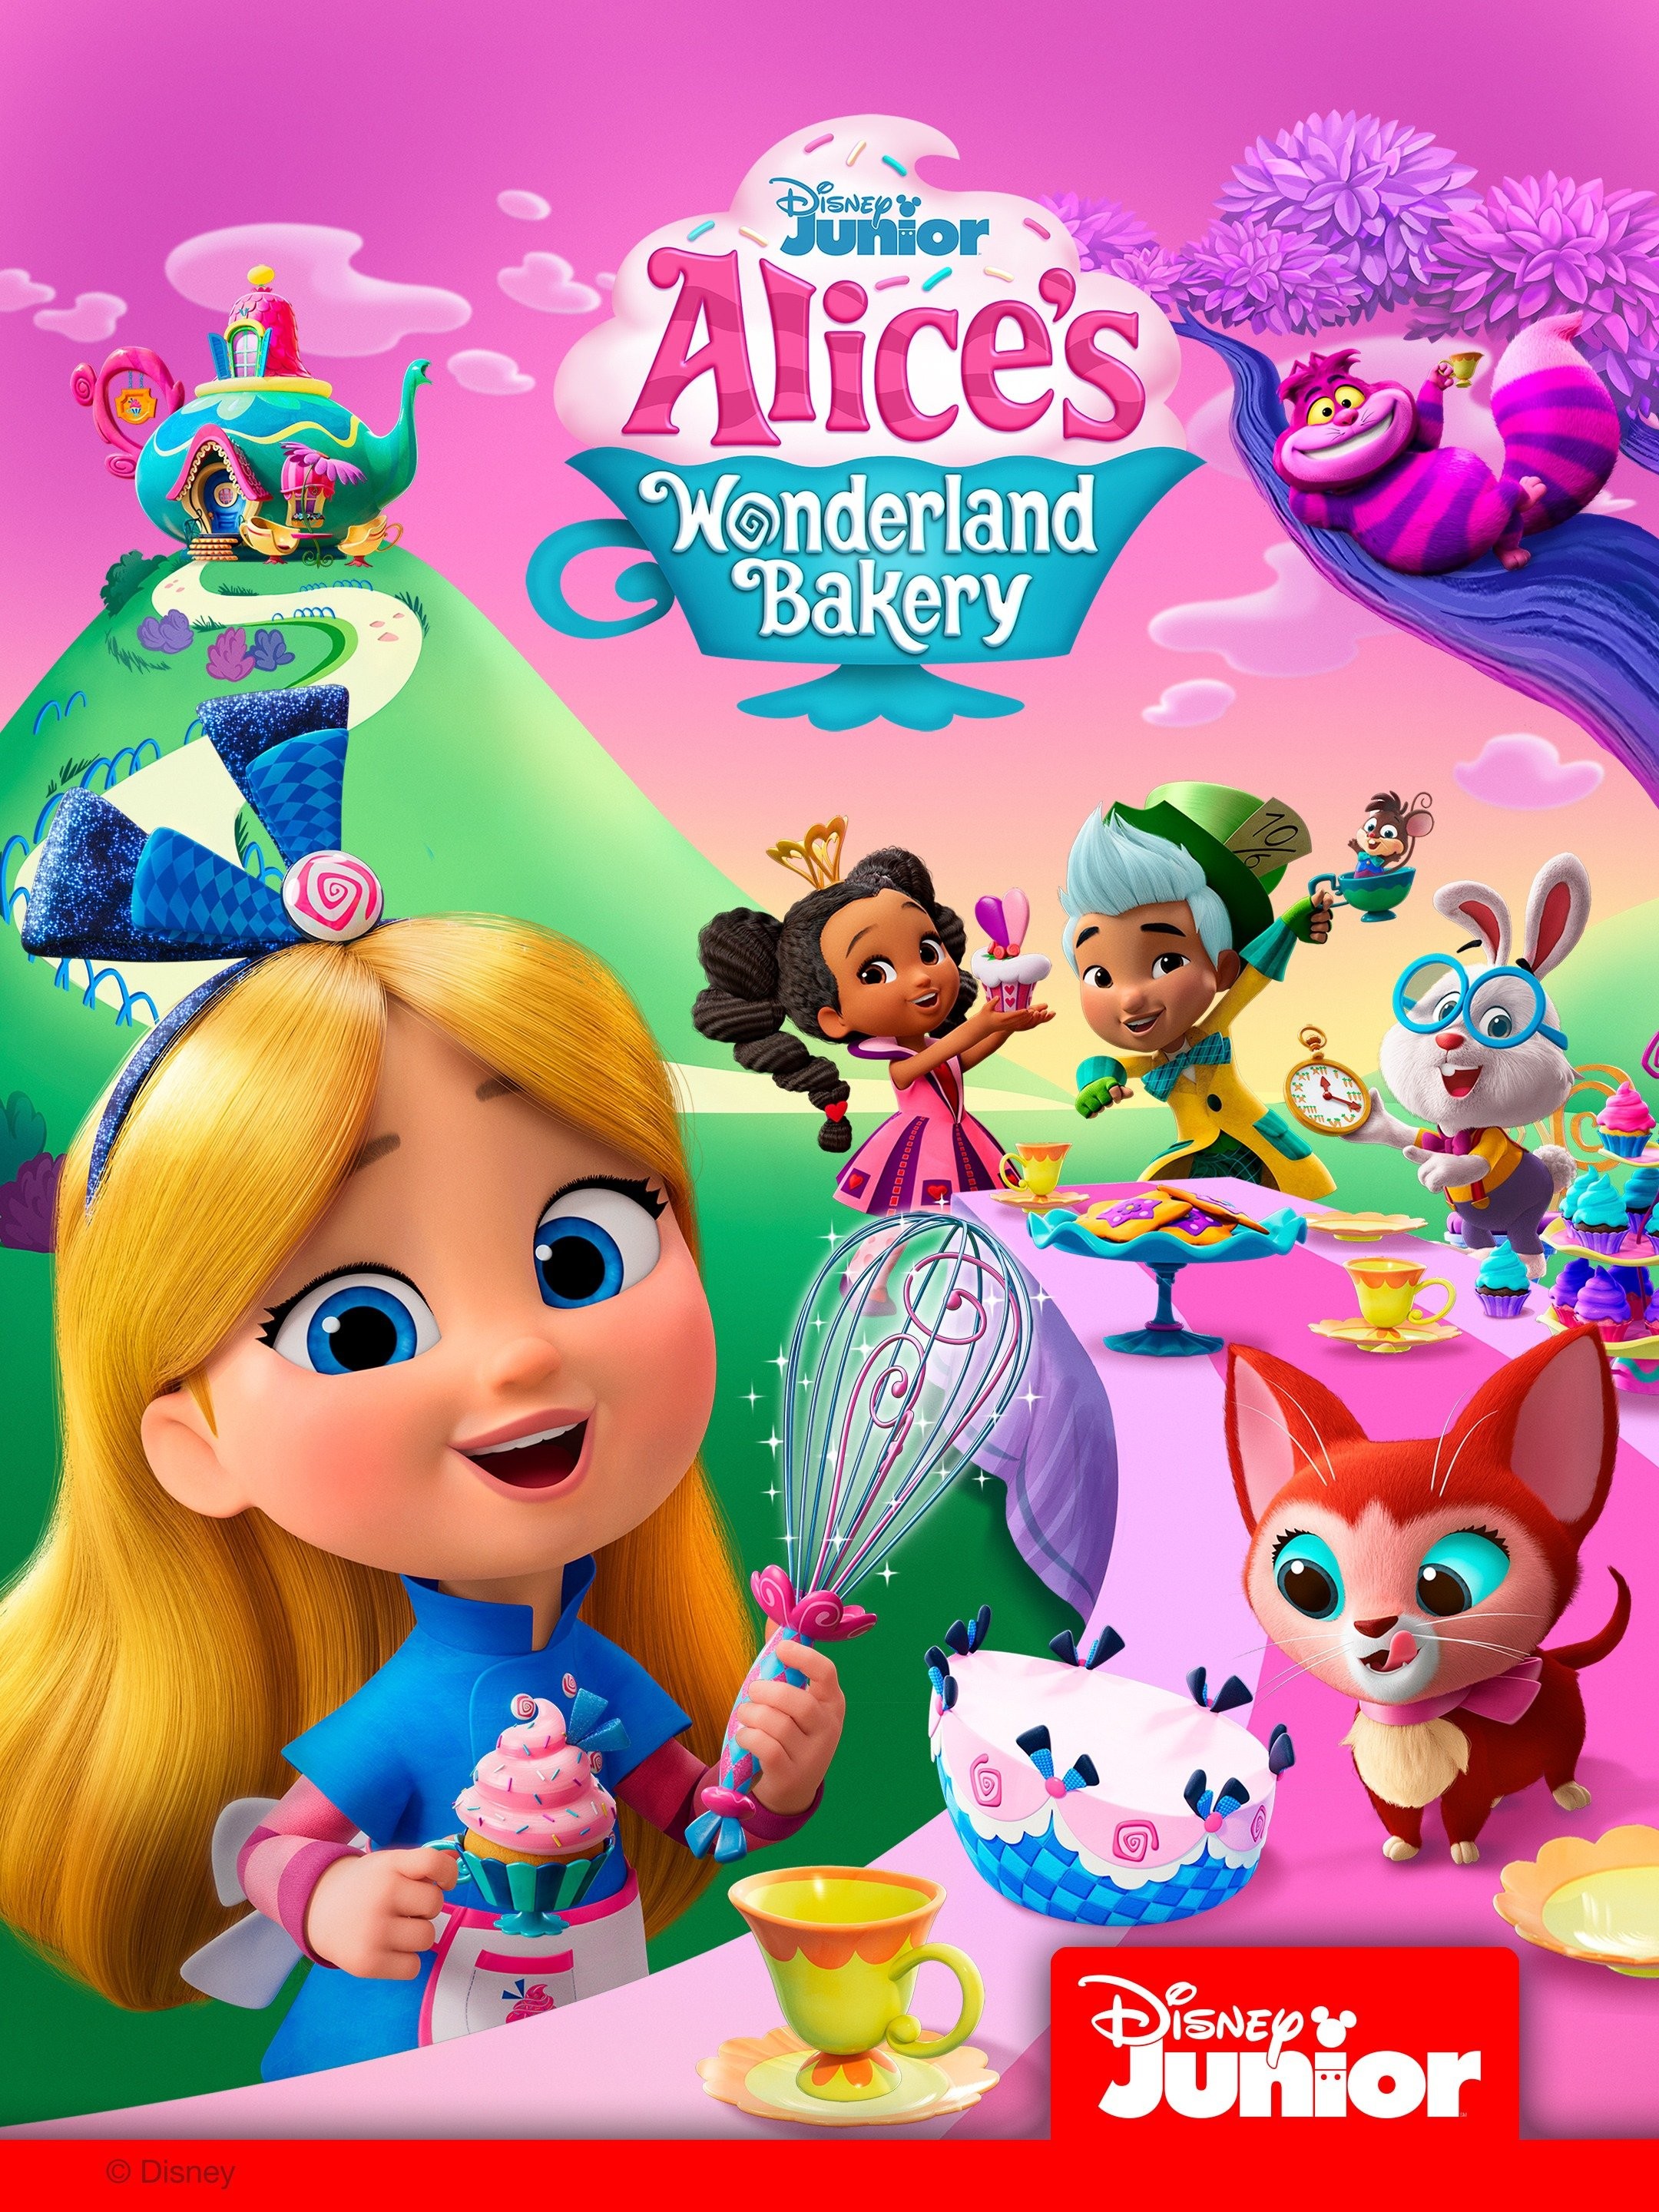 Alice's Wonderland Bakery, Feb 9 on Disney Junior